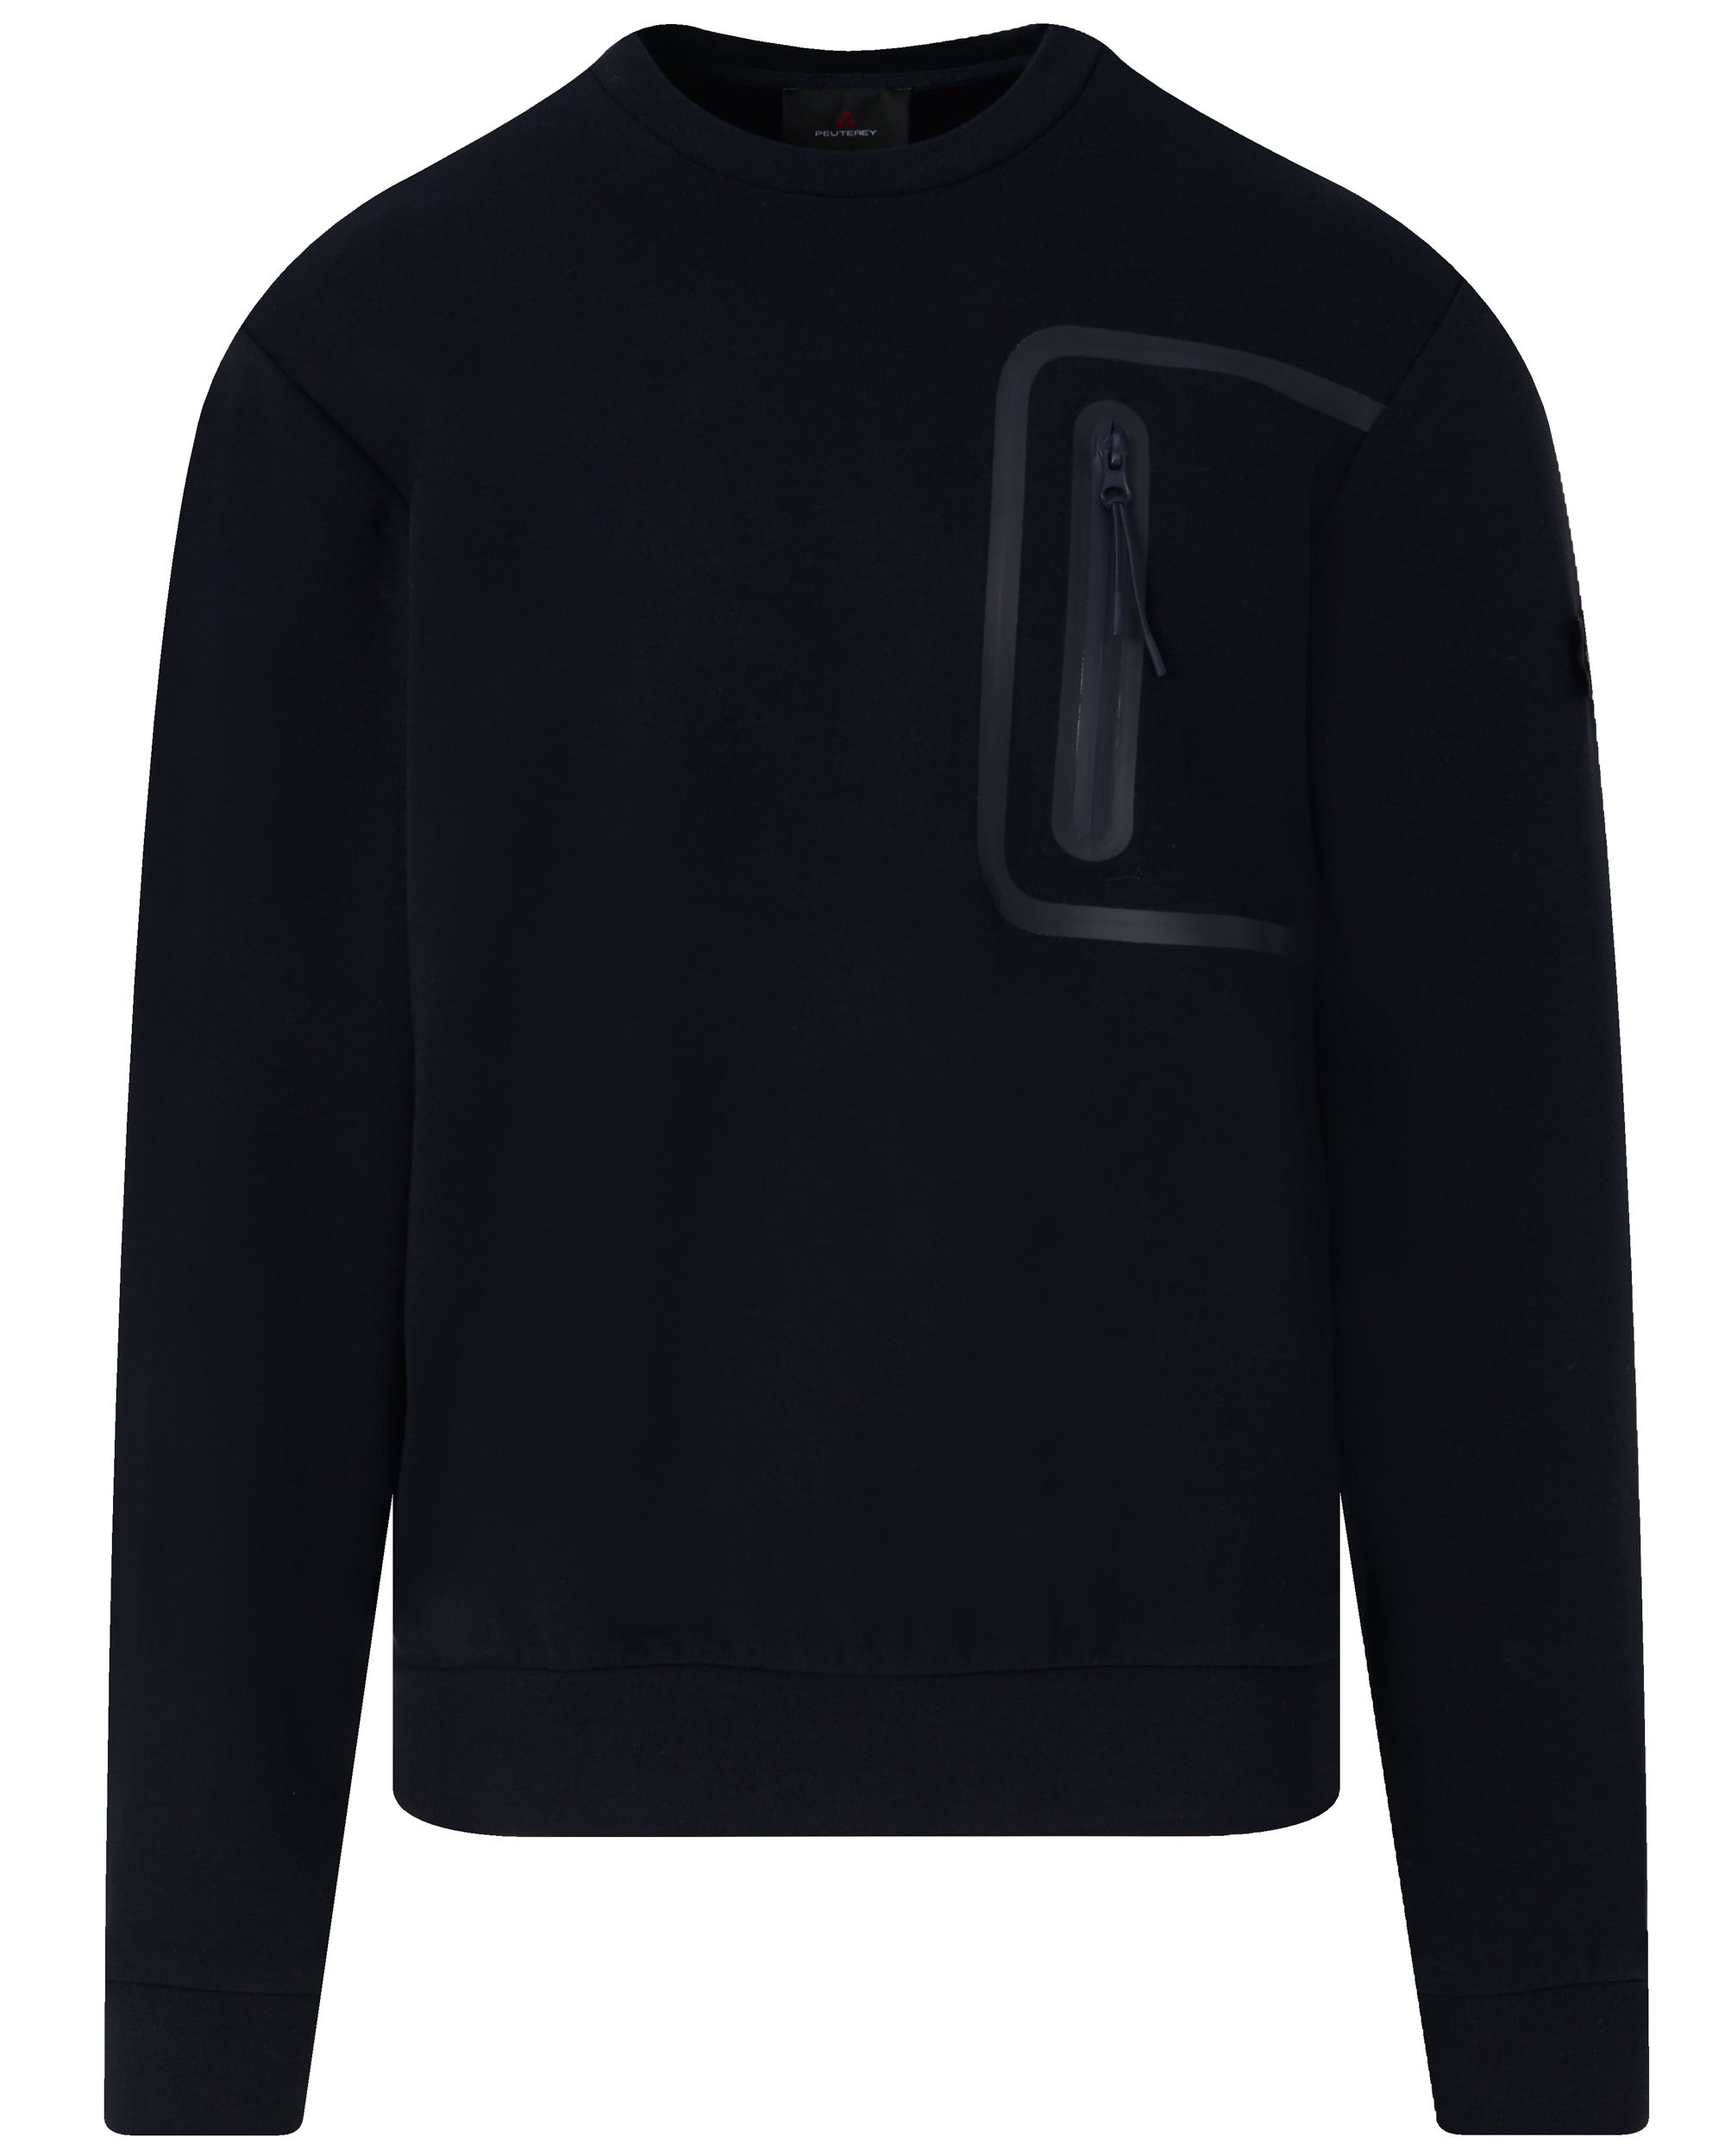 Peuterey Goire Sweater Donker blauw 094261-001-L